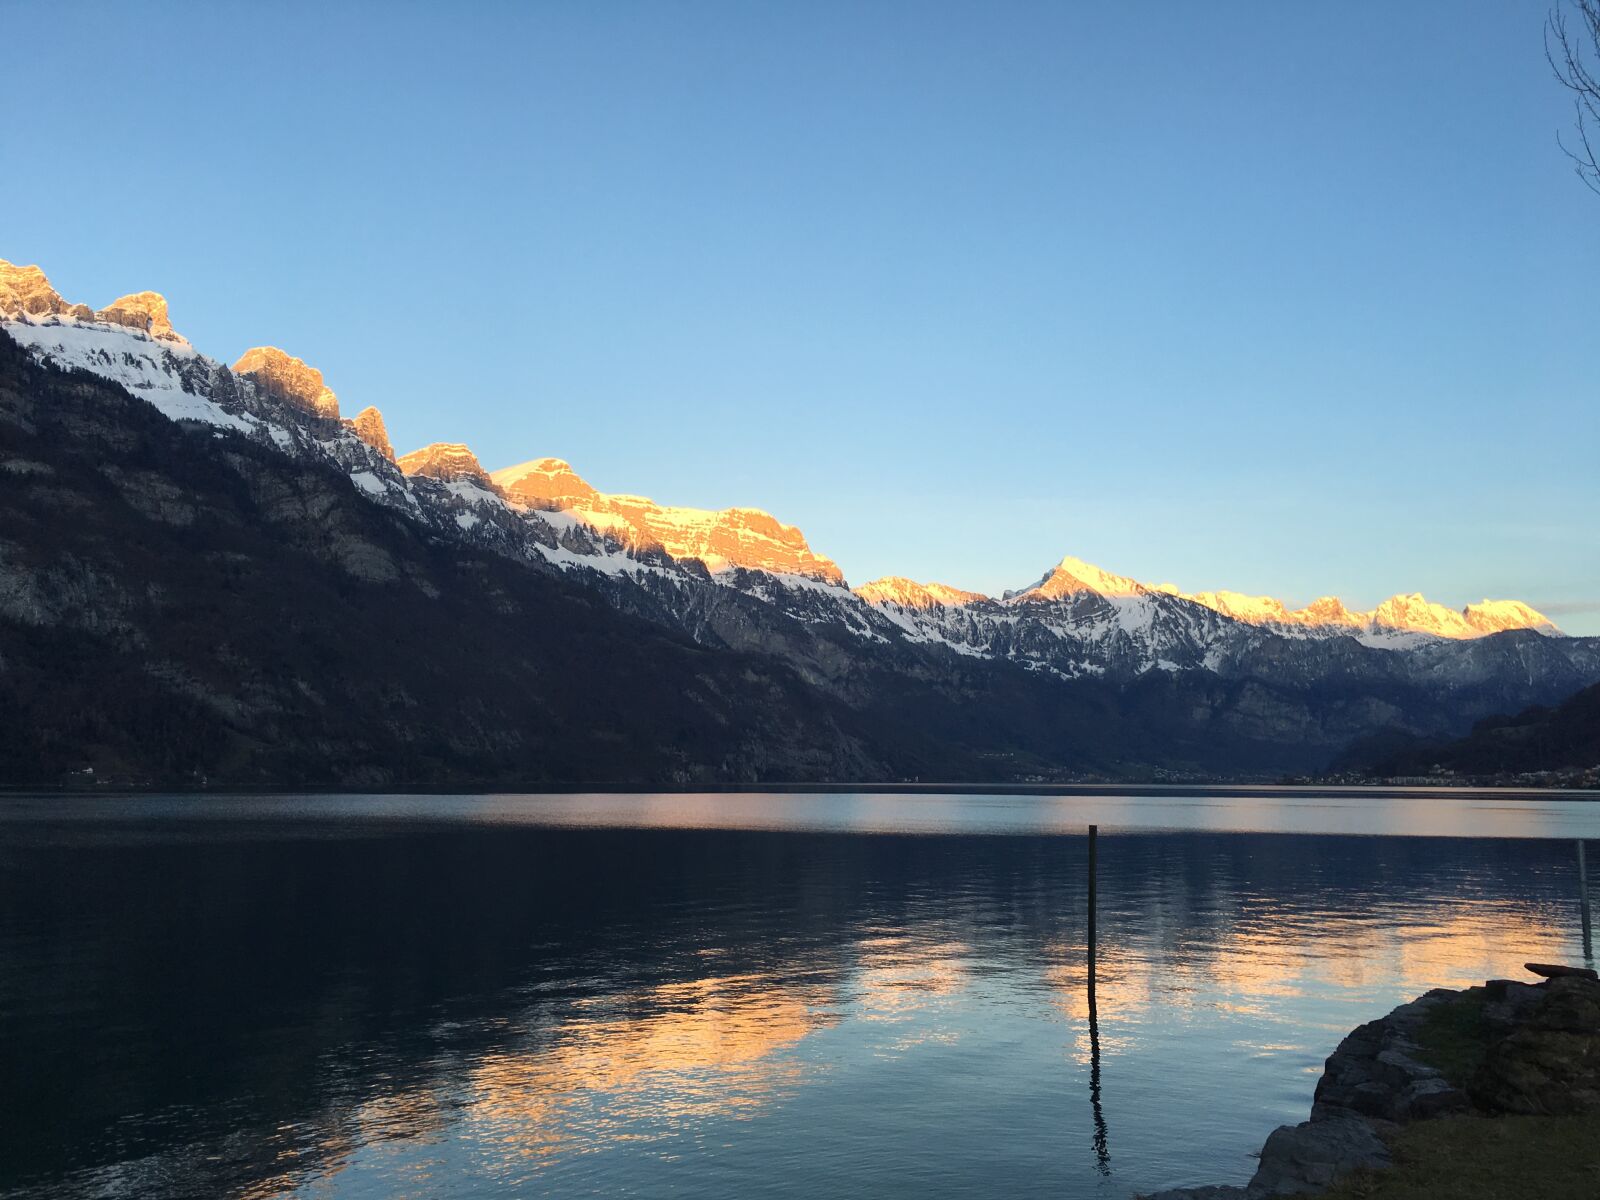 Apple iPhone 6s Plus sample photo. Lake walen, switzerland, lake photography